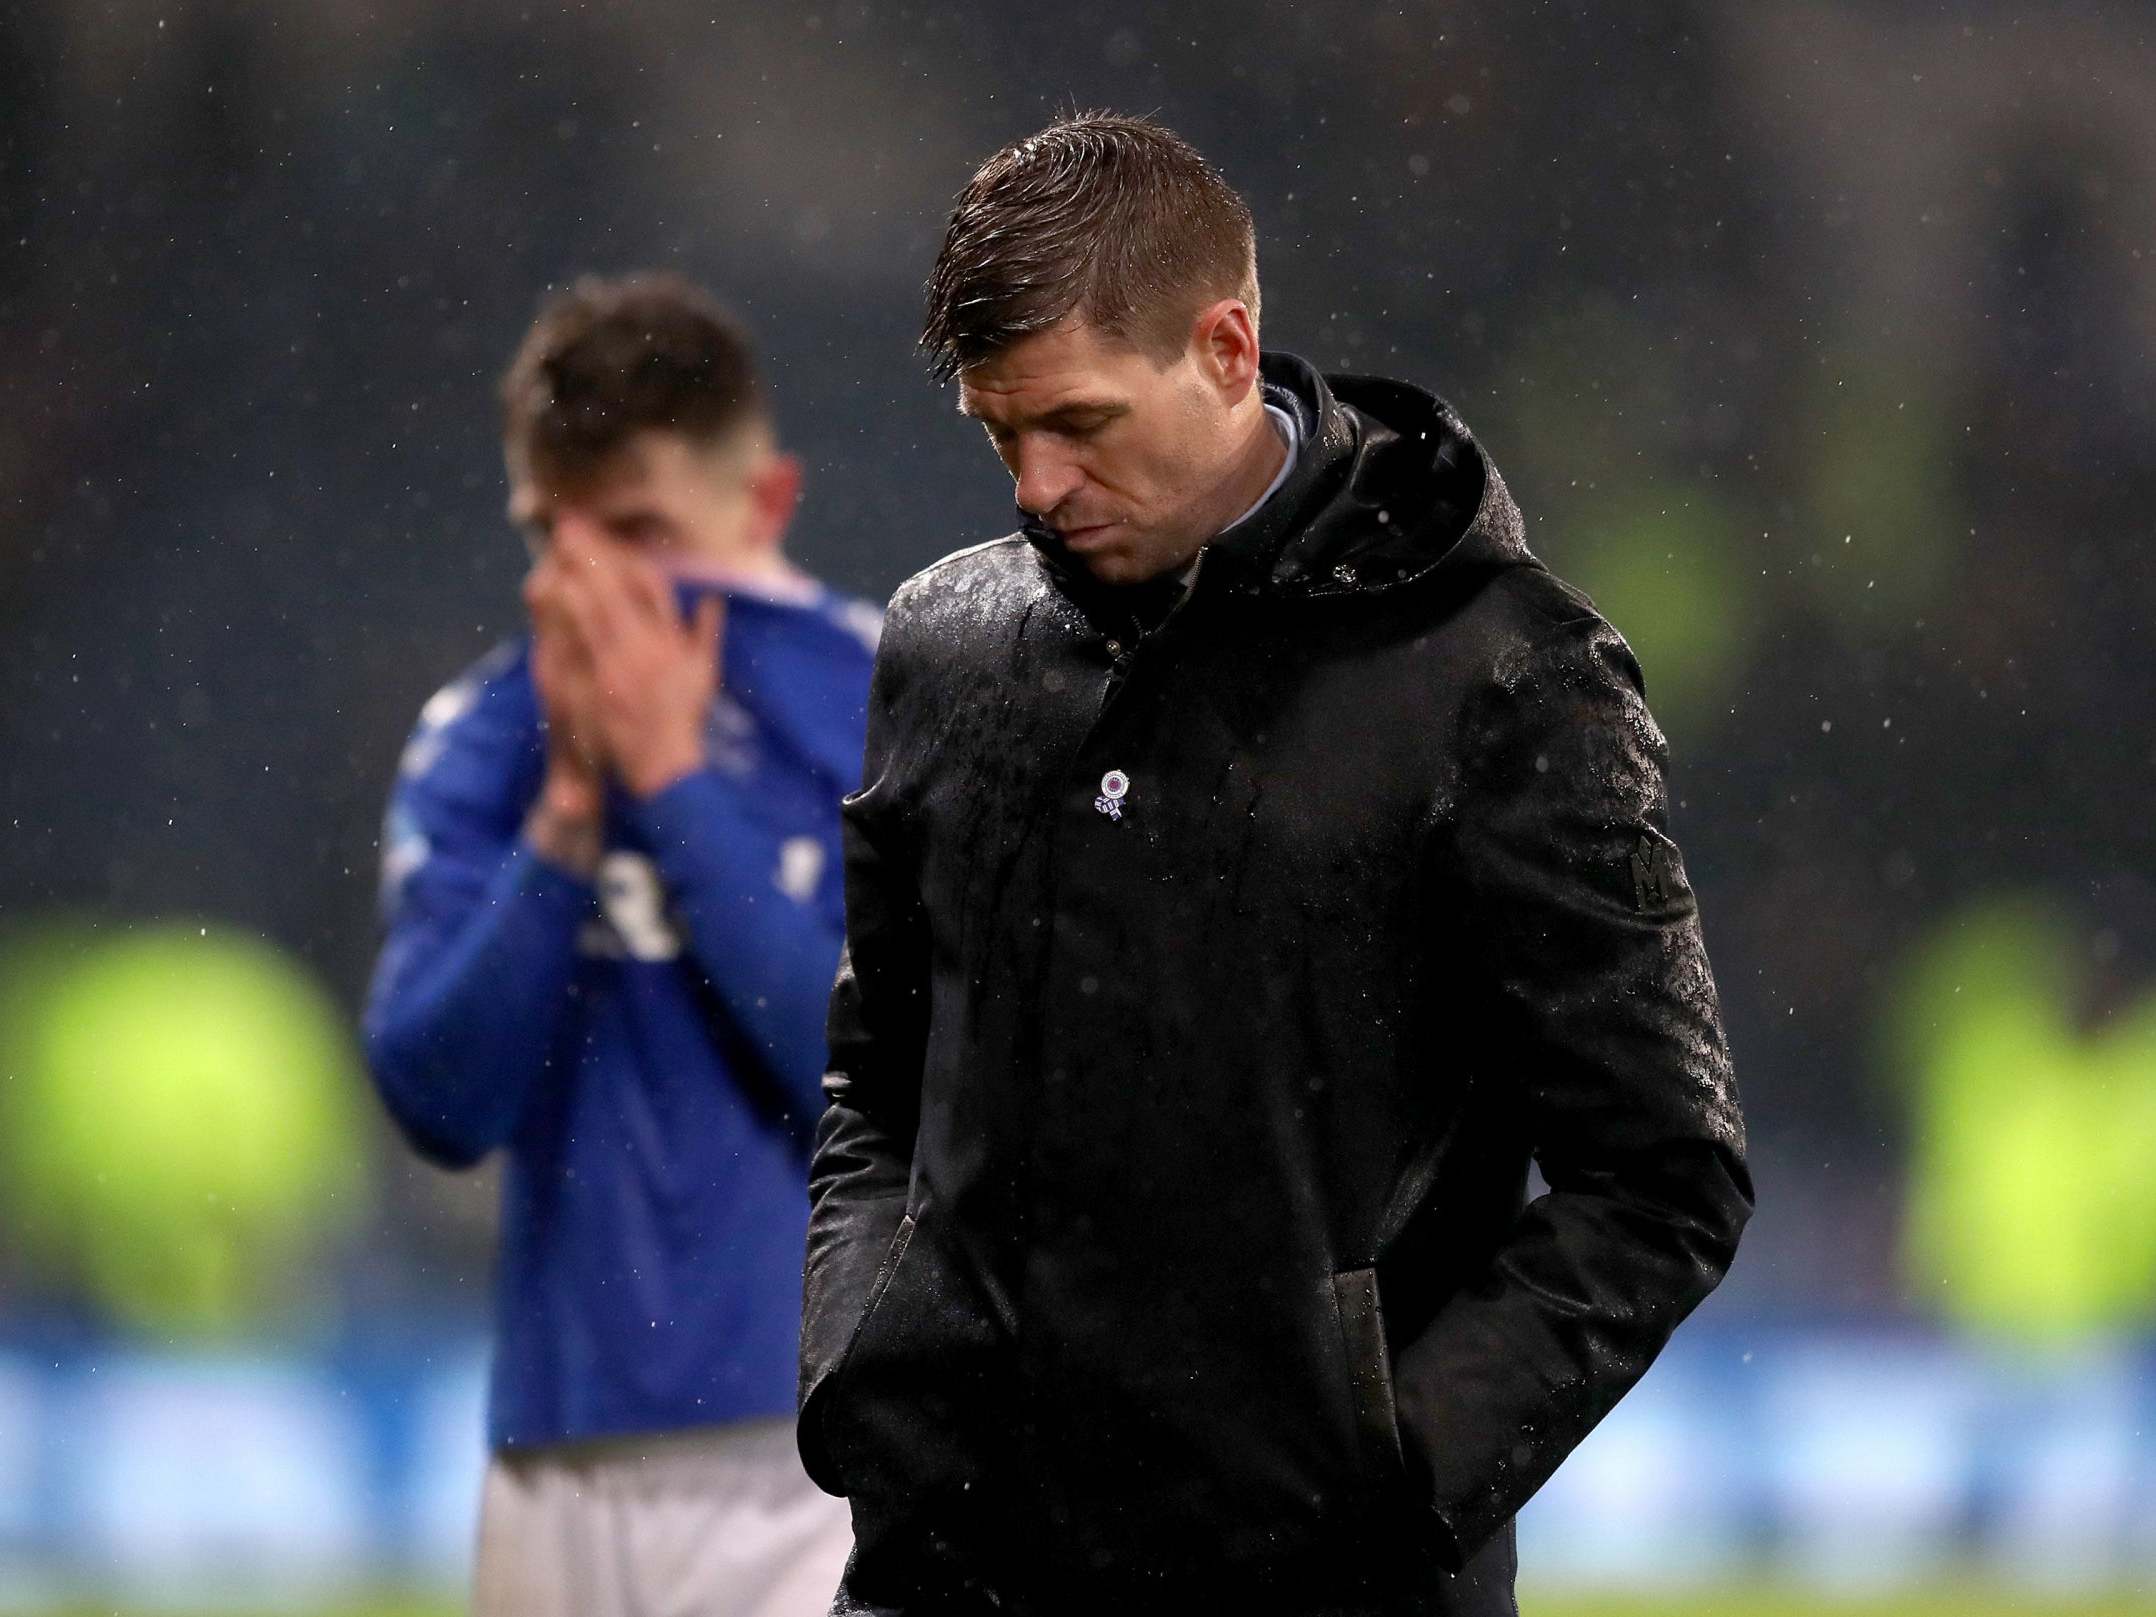 Steven Gerrard cuts a dejected figure at full time